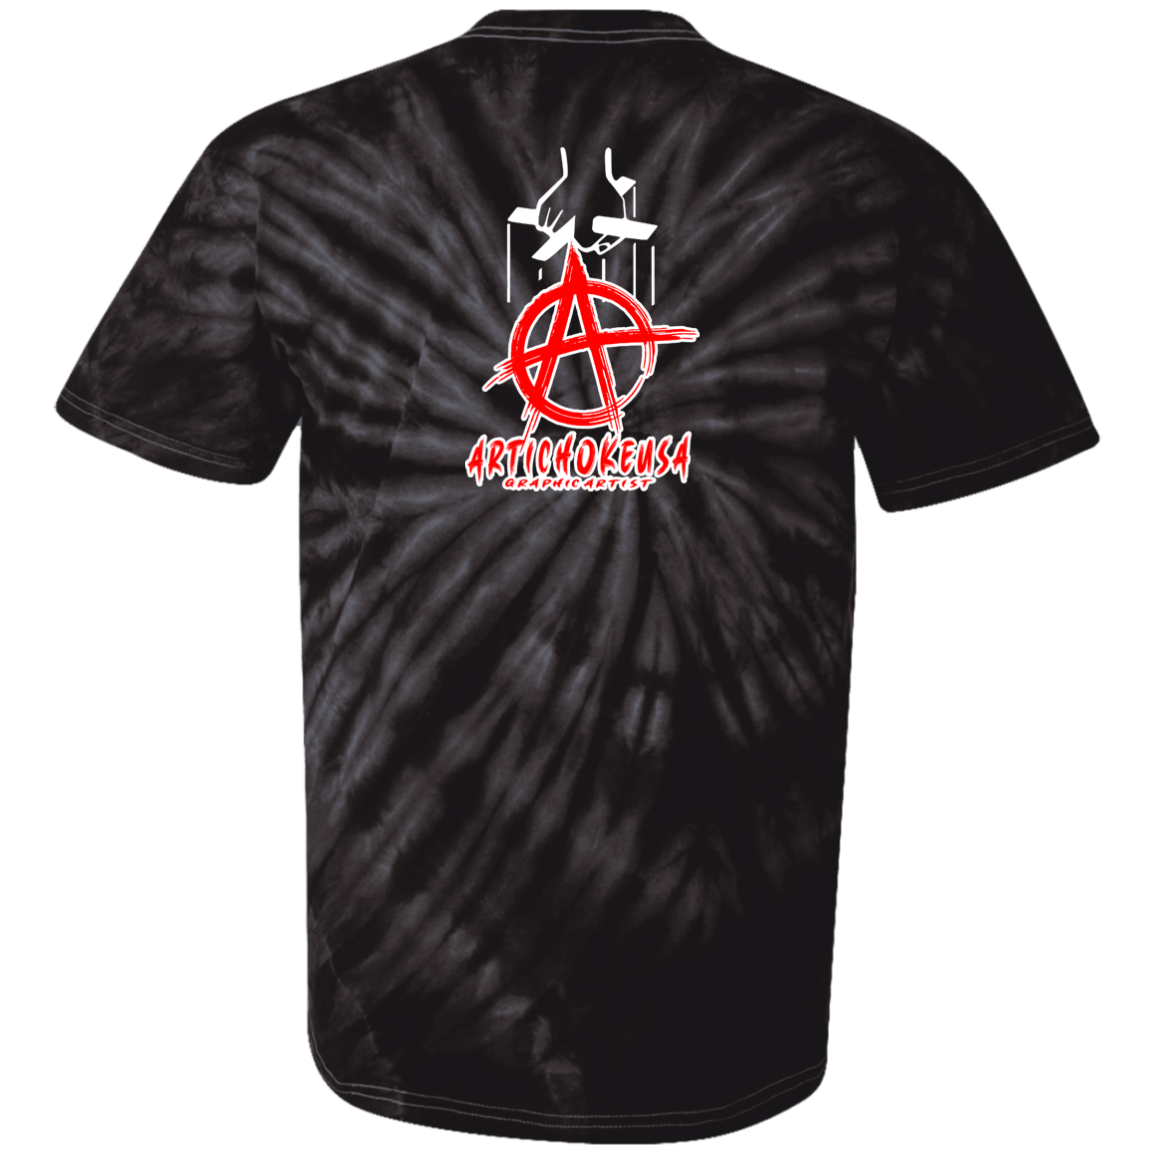 ArtichokeUSA Custom Design. Godfather Simms. NY Giants Superbowl XXI Champions. Fan Art. Tie Dye 100% Cotton T-Shirt